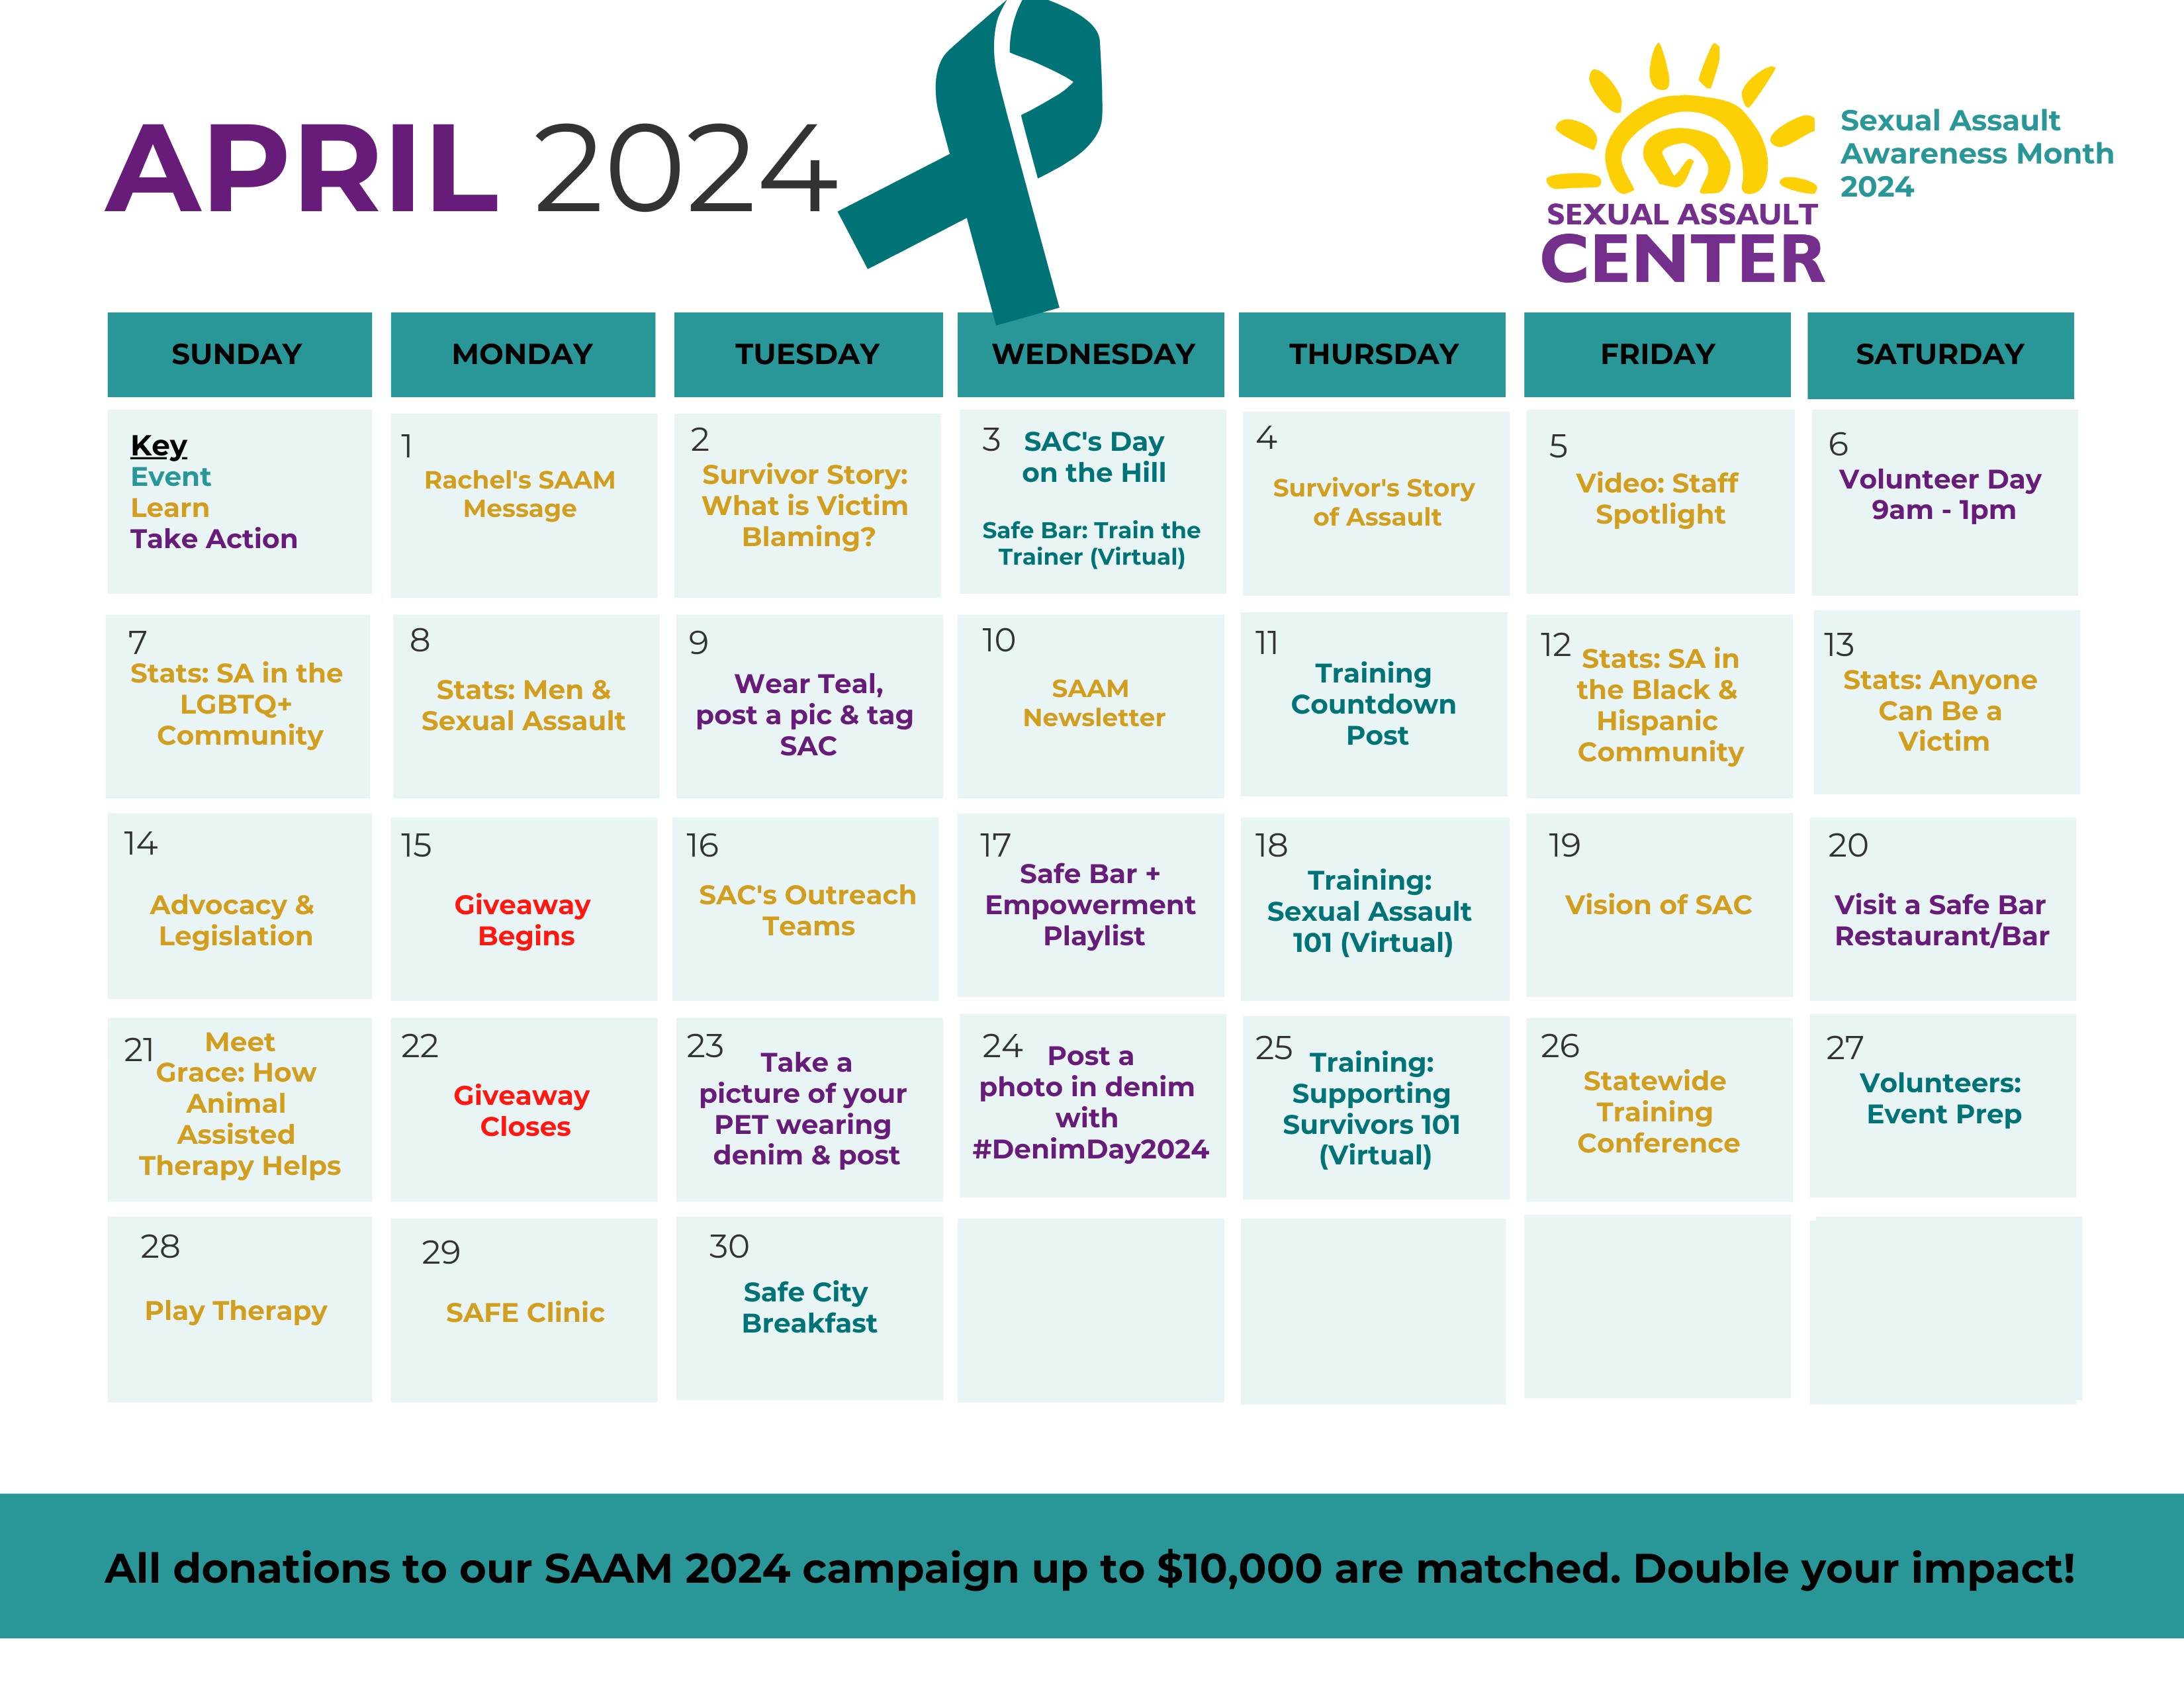 SafeCity Sexual Assault Awareness Month Calendar